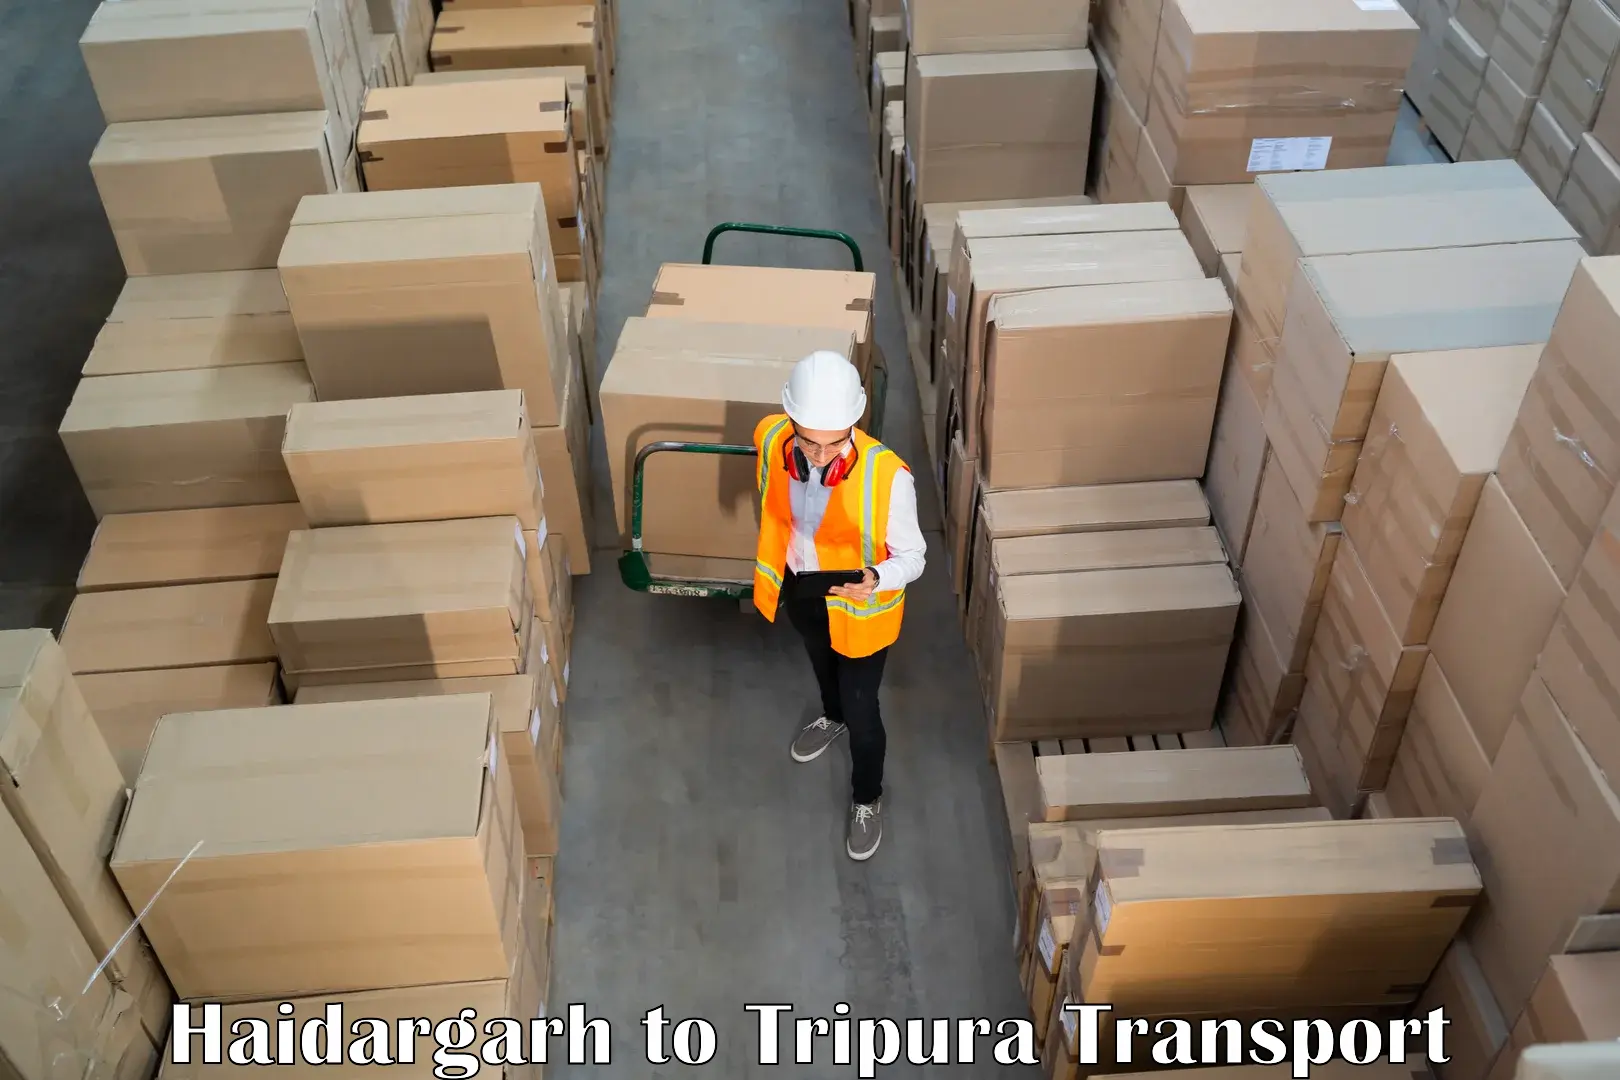 Lorry transport service Haidargarh to Udaipur Tripura